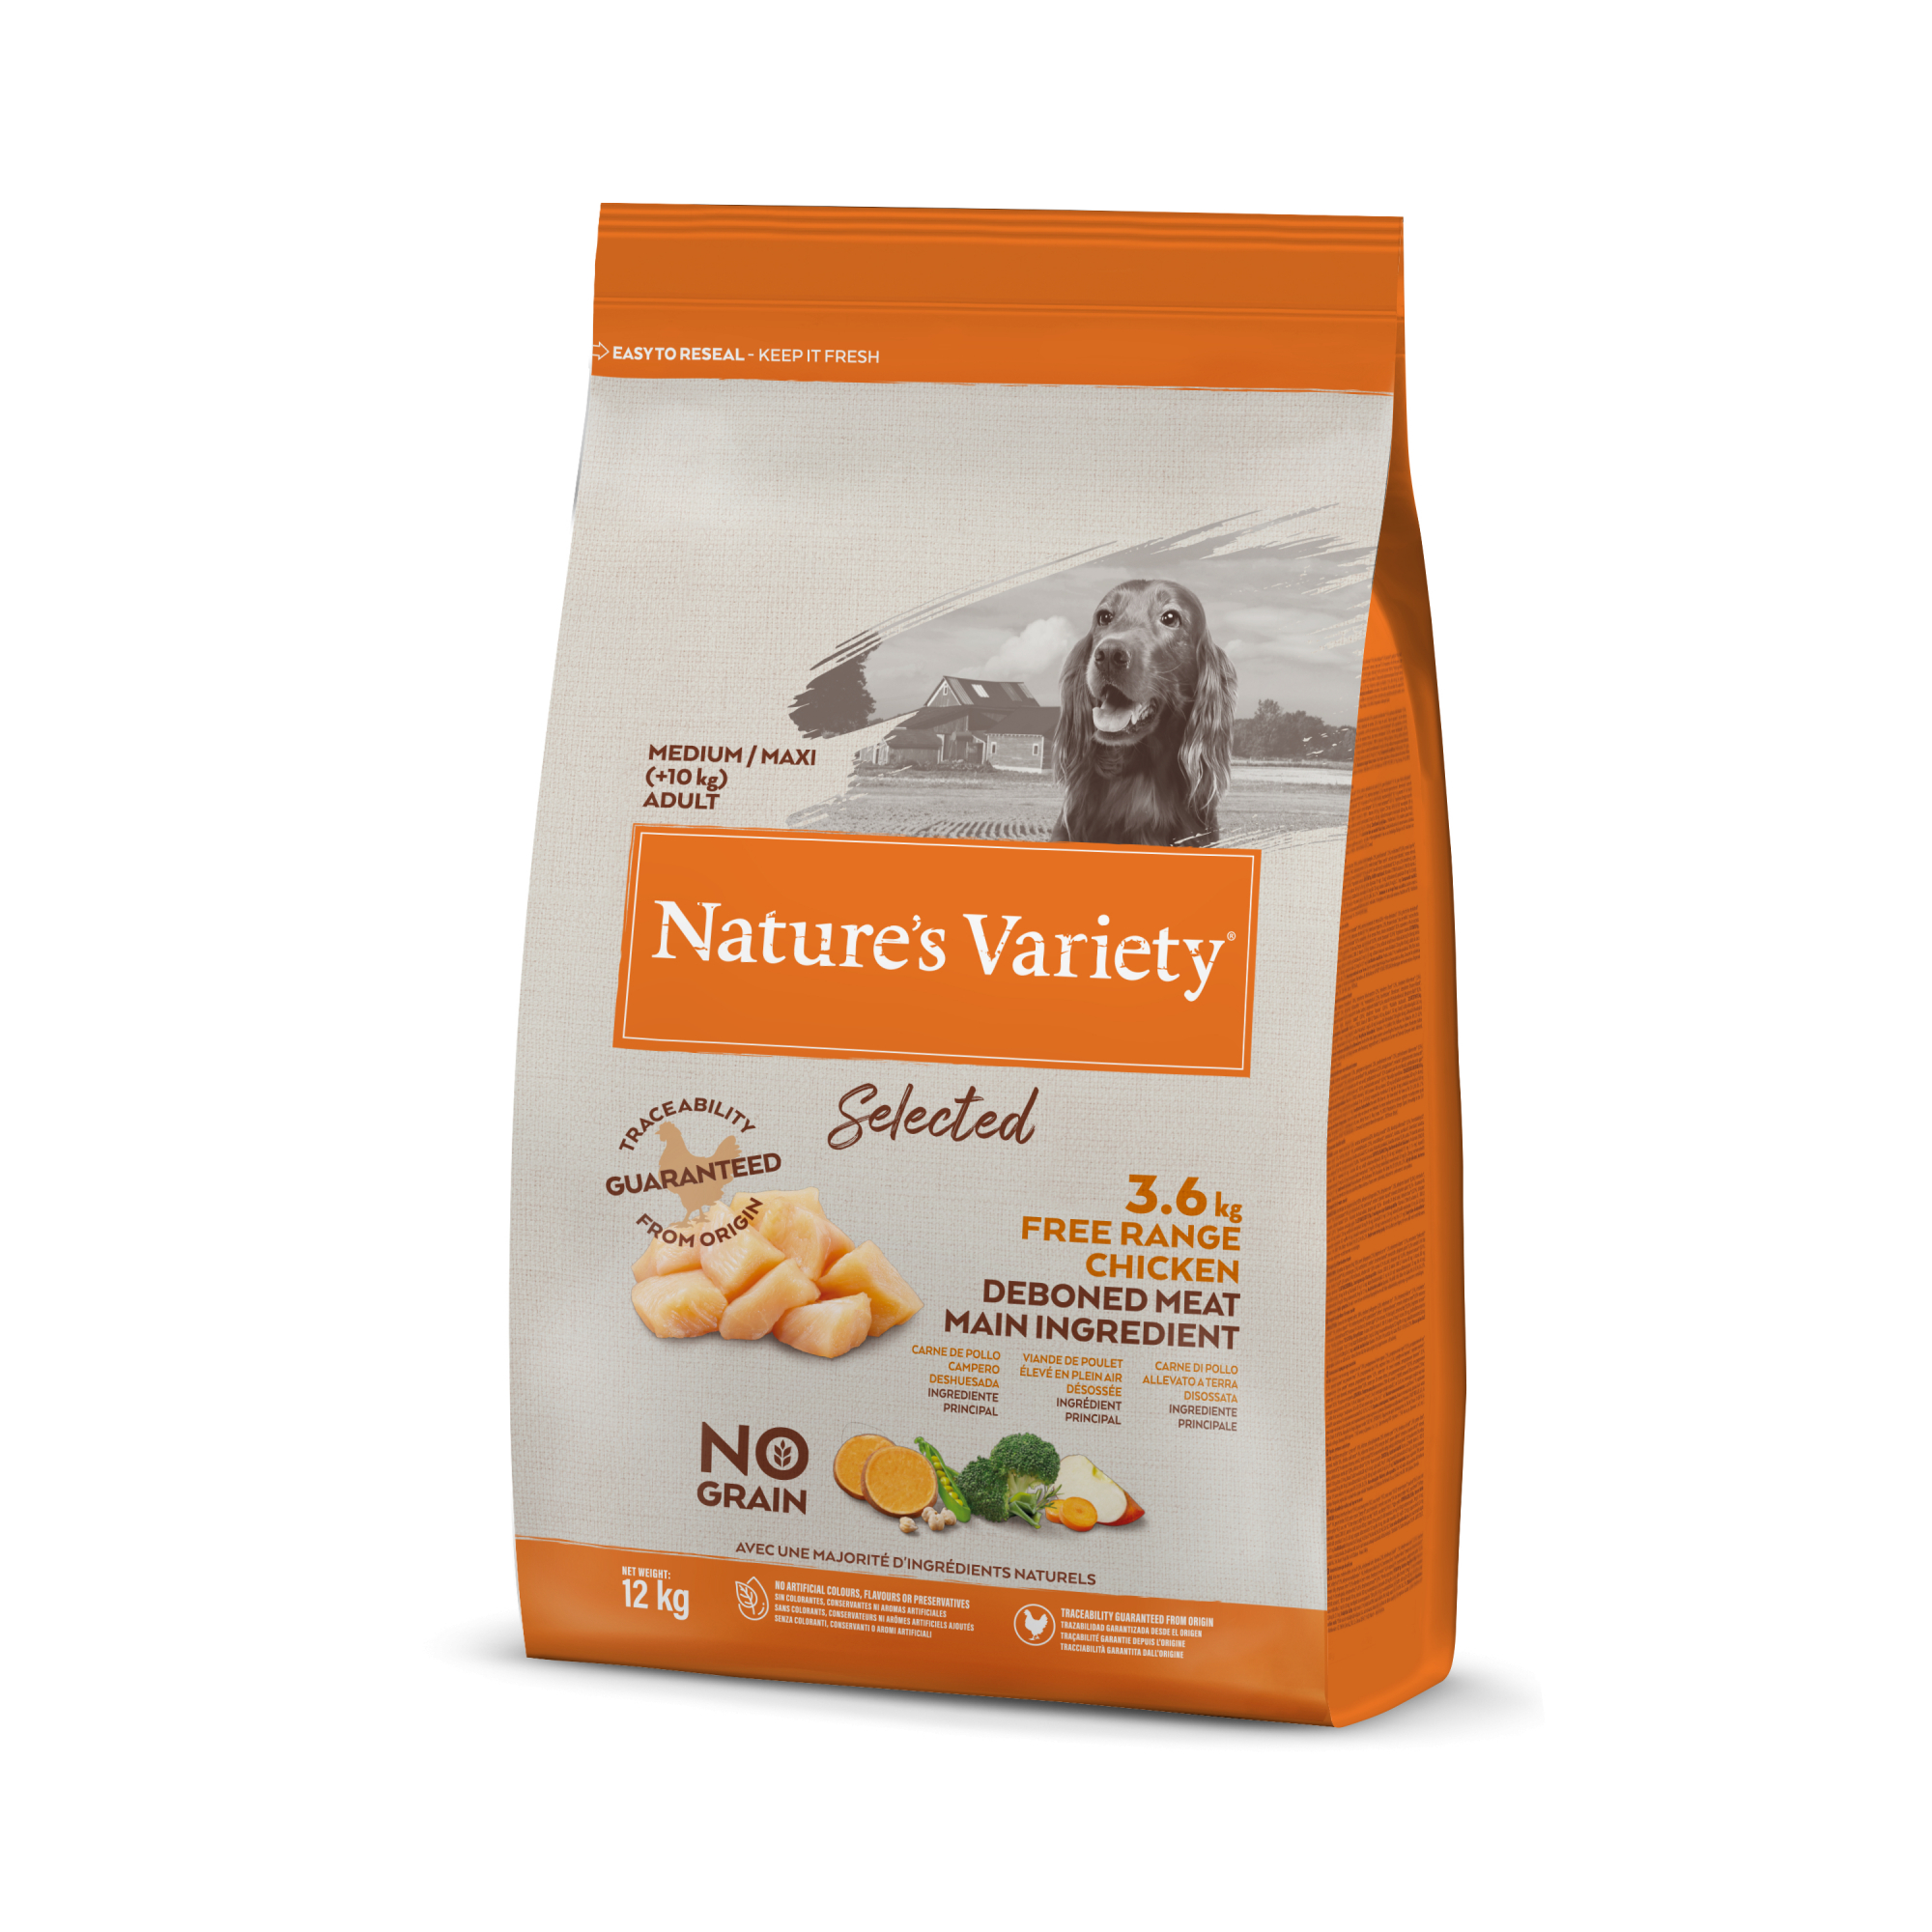 NATURE'S VARIETY Selected Medium Maxi Adult No Grain pollo campero pienso para perros